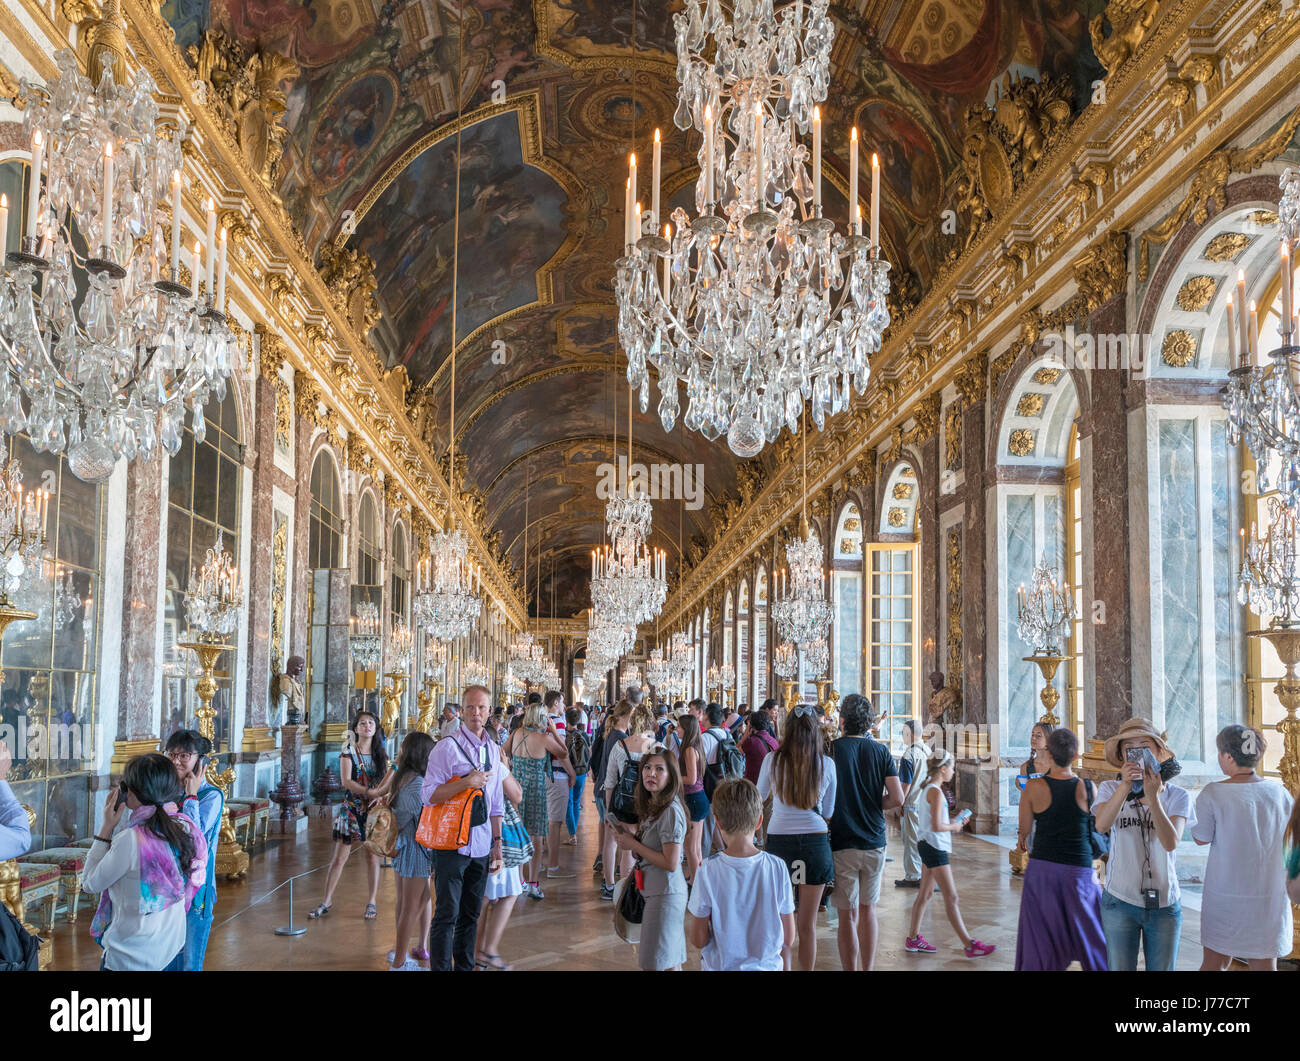 The Hall of Mirrors (Galerie des Glaces), Chateau de Versailles (Palace of Versailles), near Paris, France Stock Photo